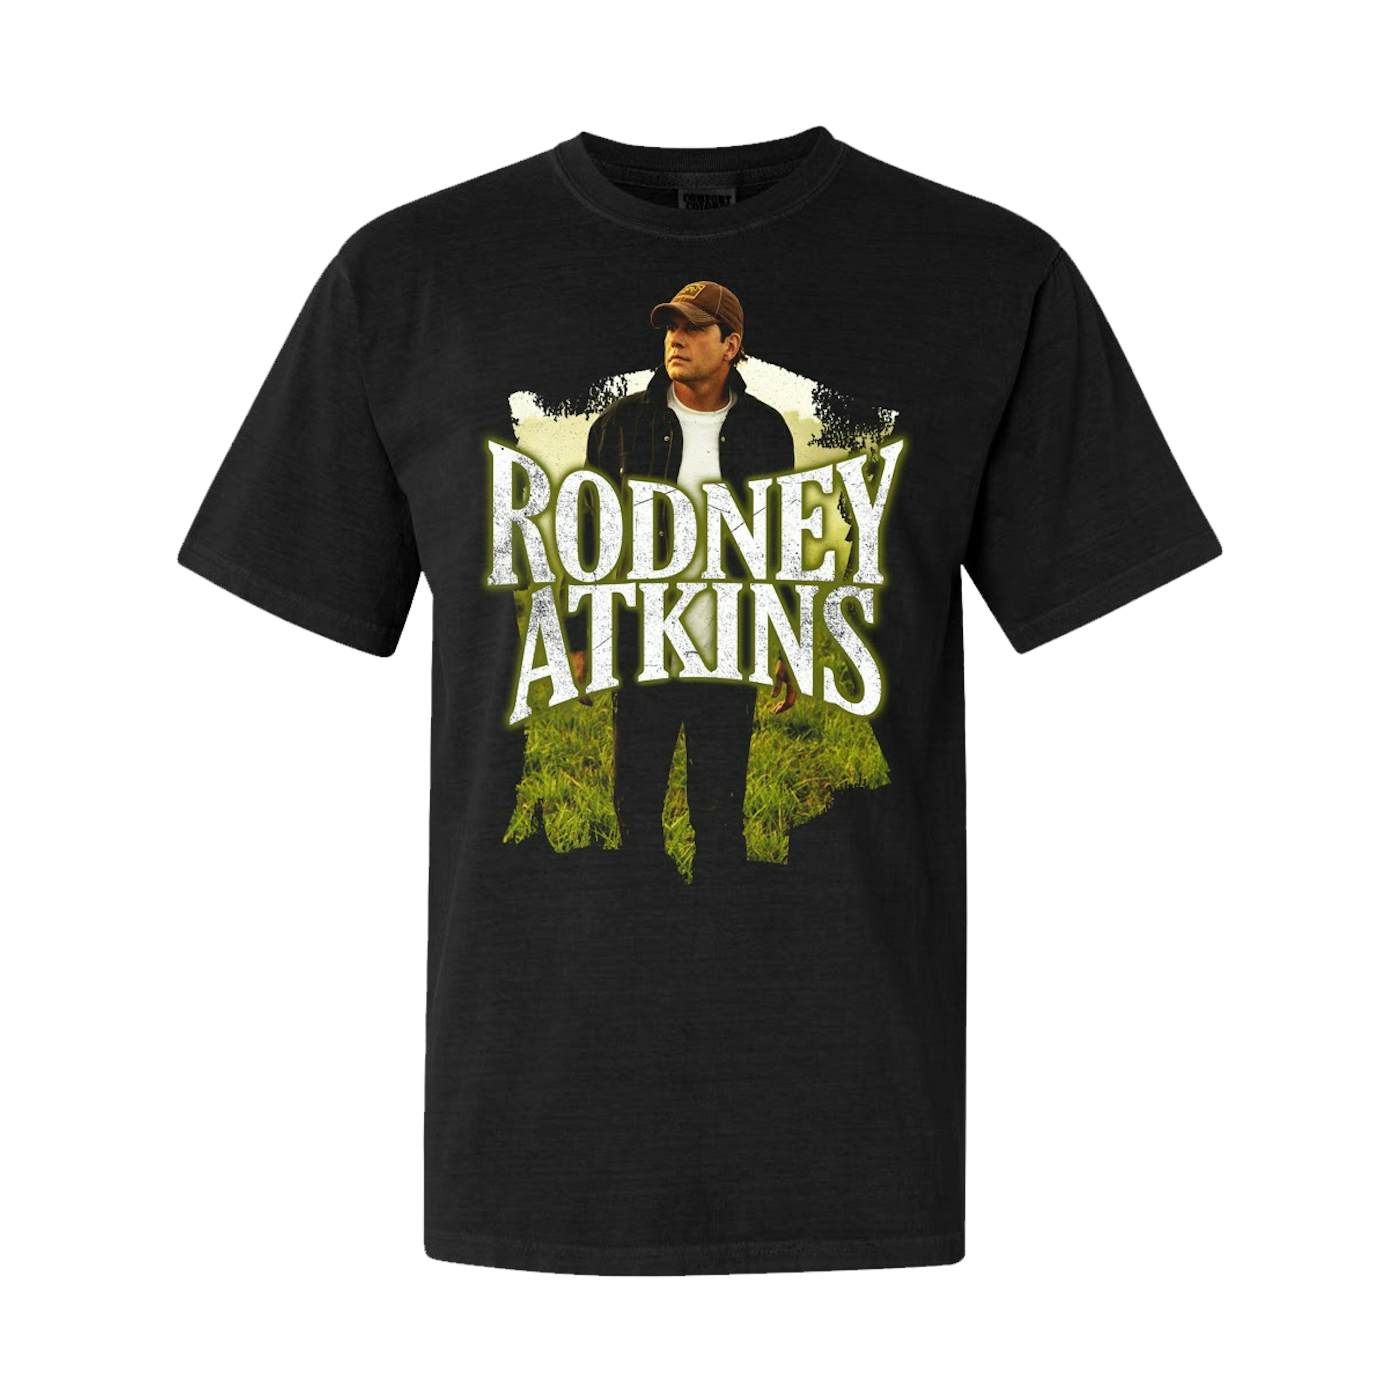 Rodney Atkins 2018 Tour T-shirt